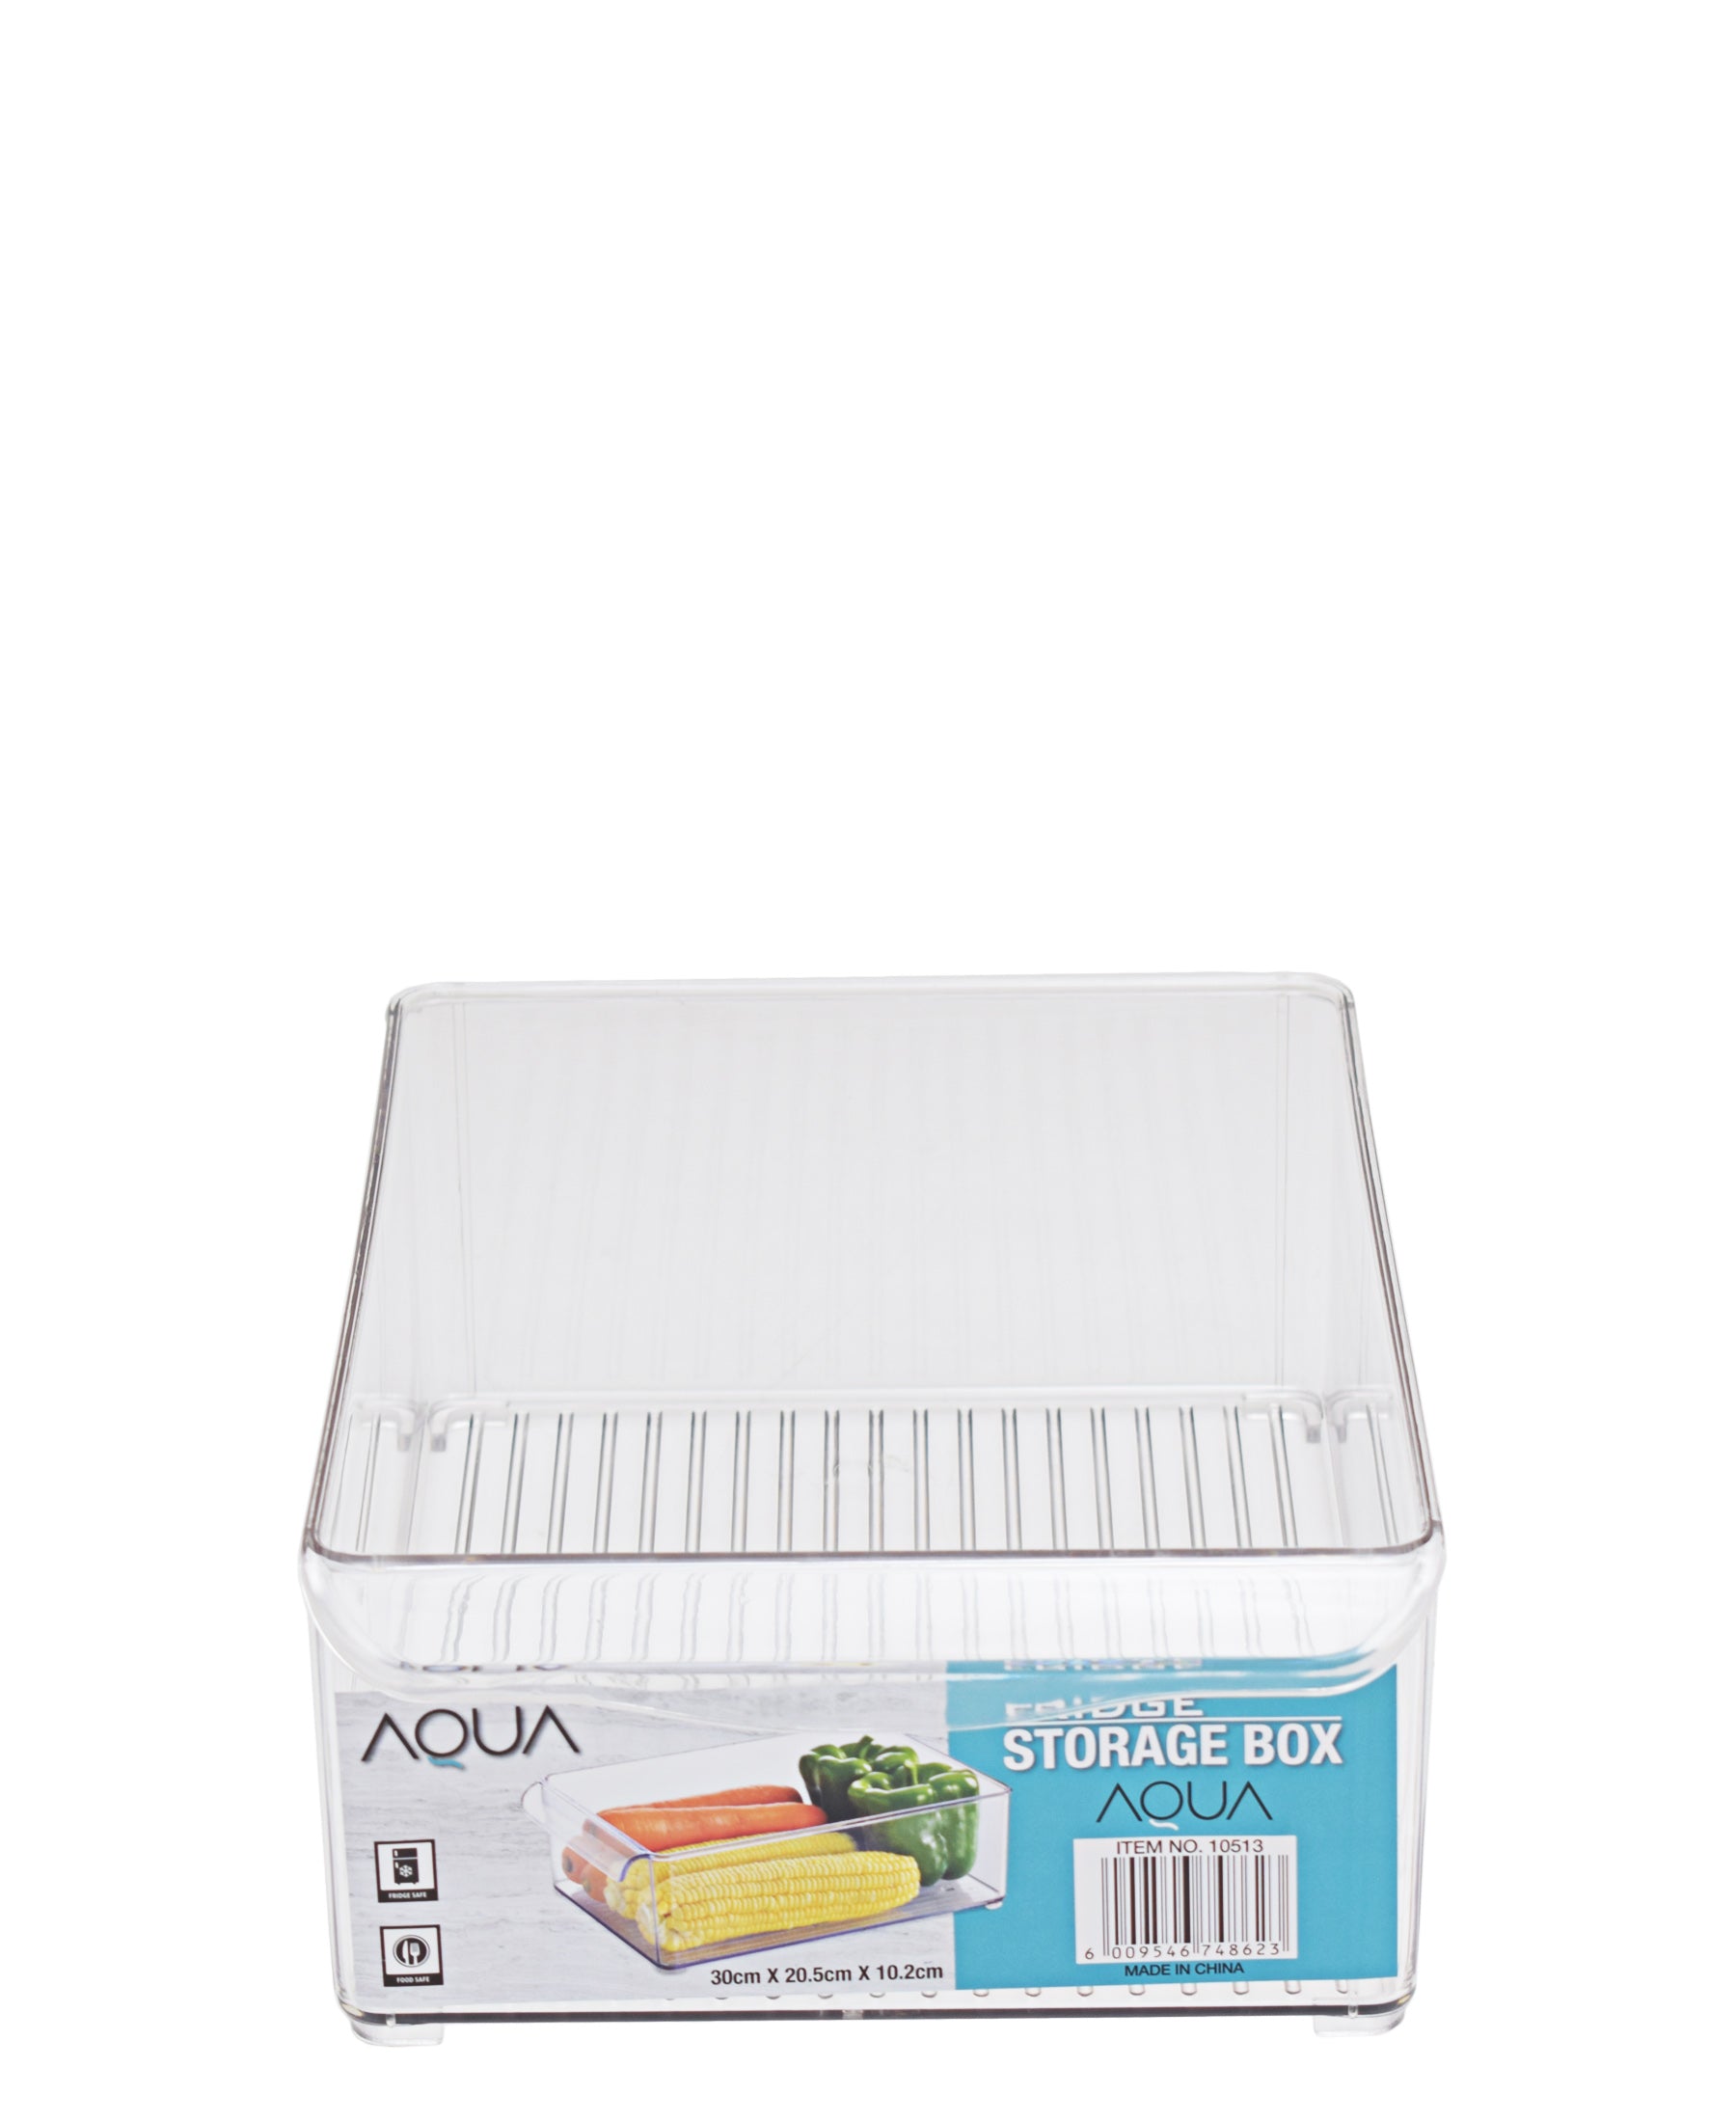 Aqua Fridge Storage Box 30cm - Clear